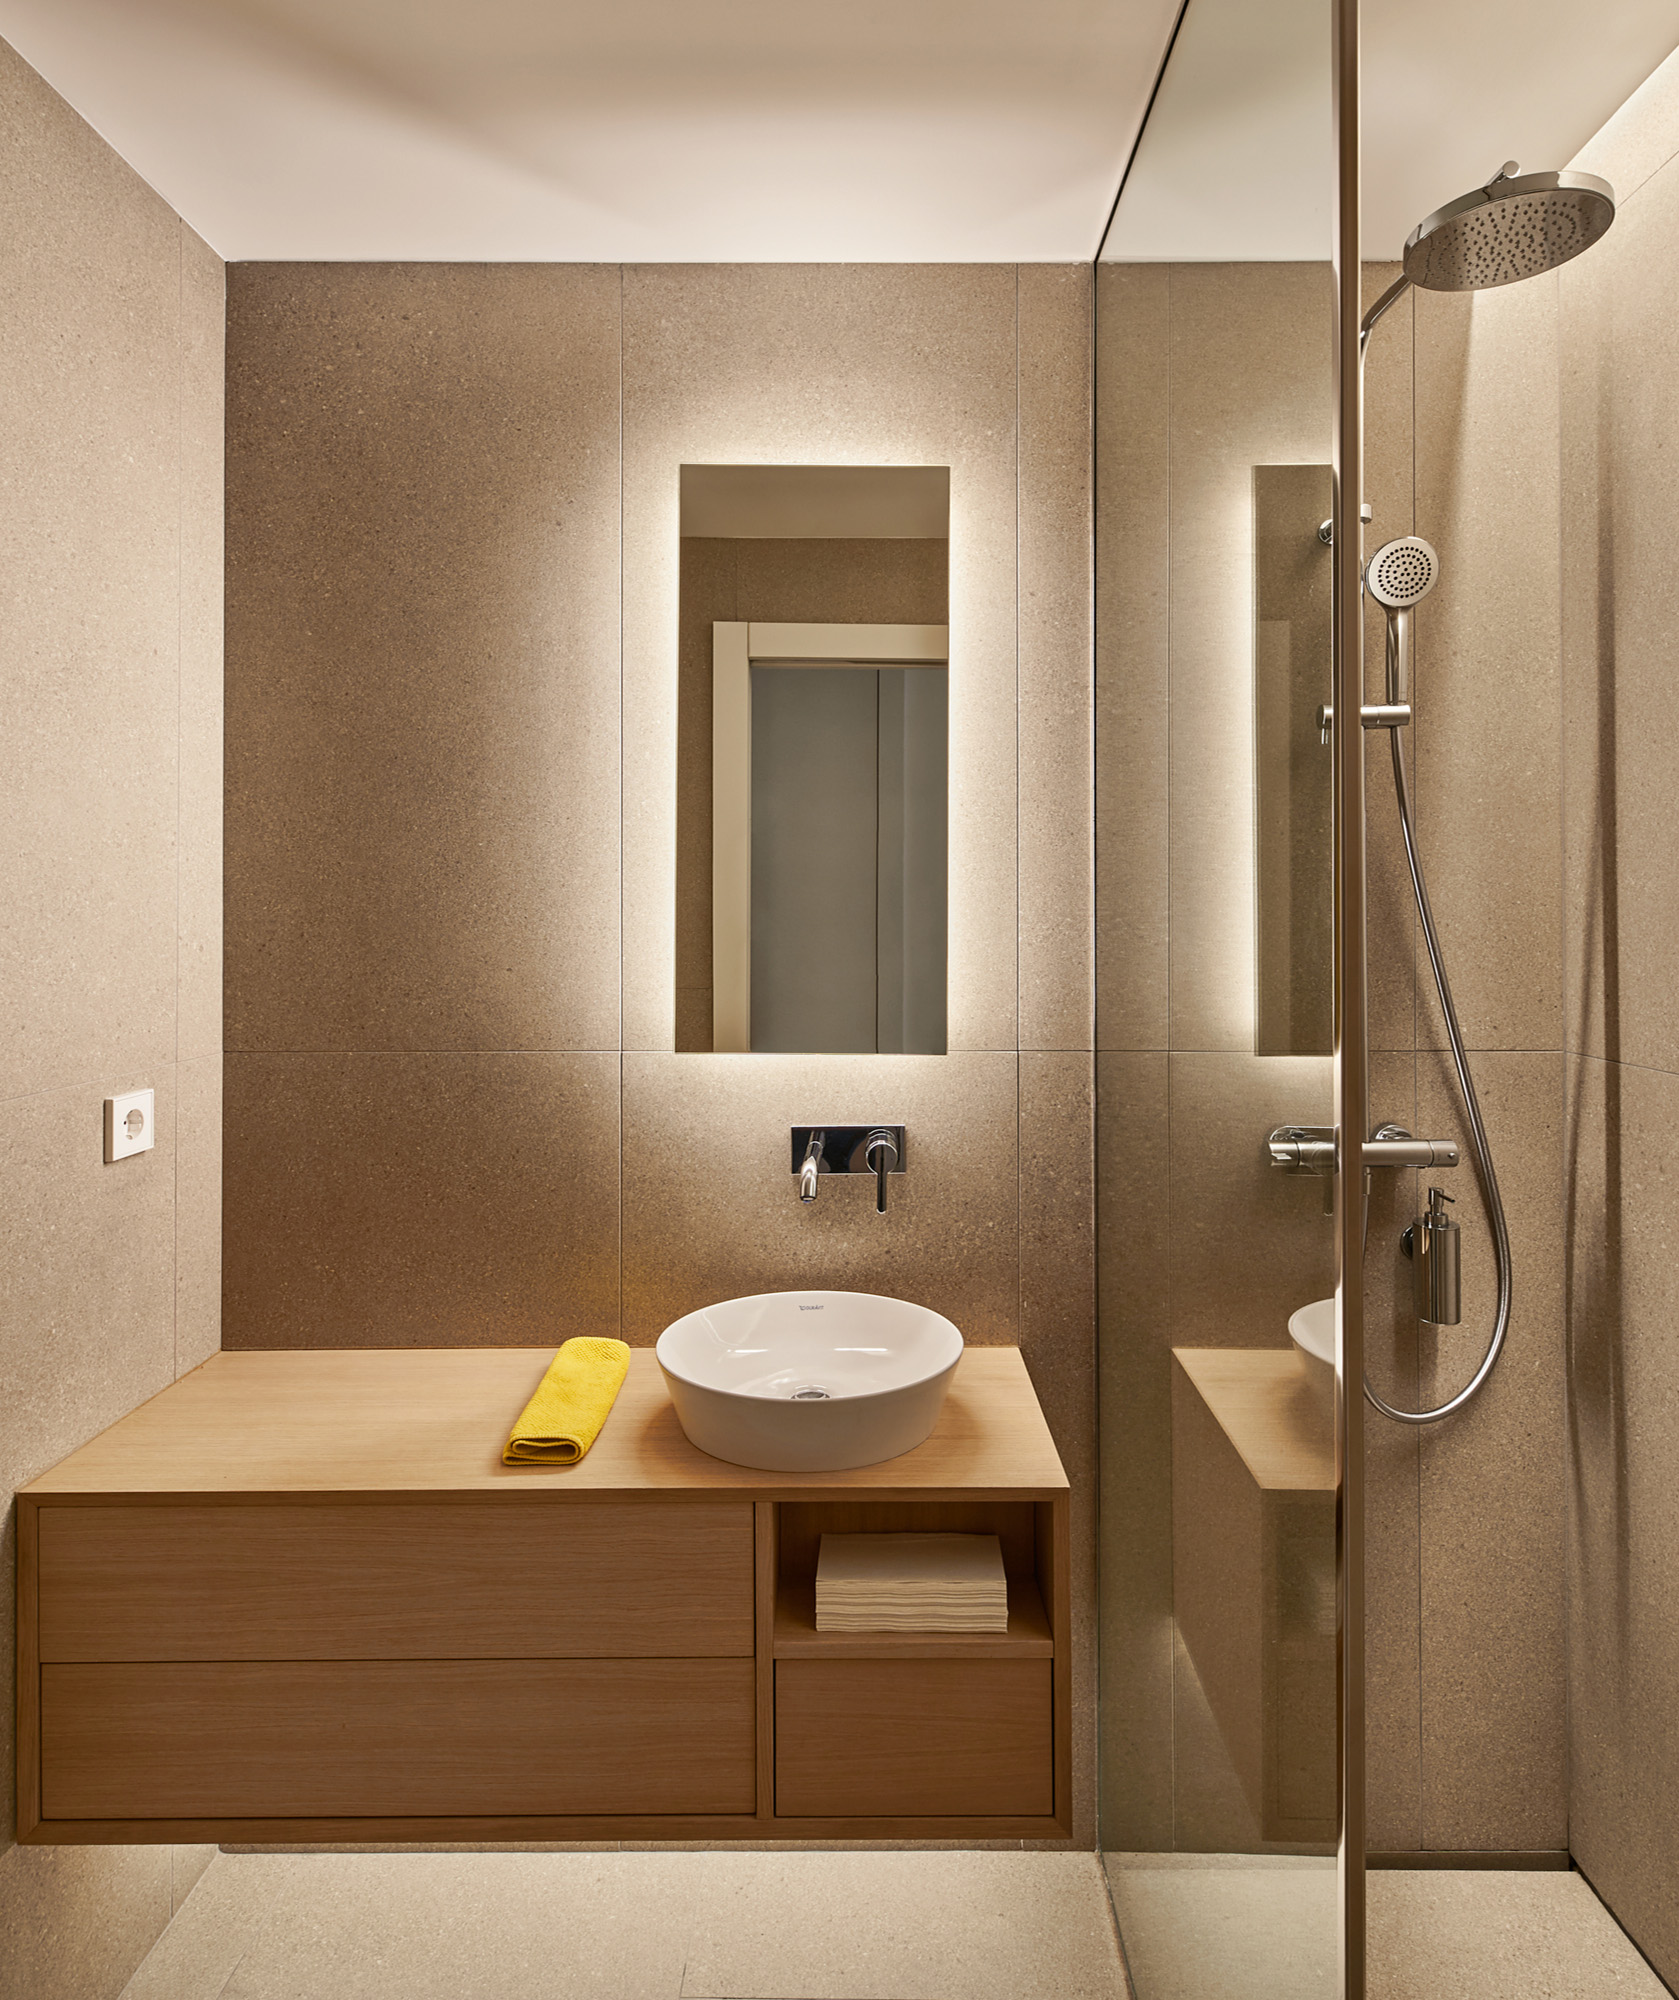 a minimalist bathroom design